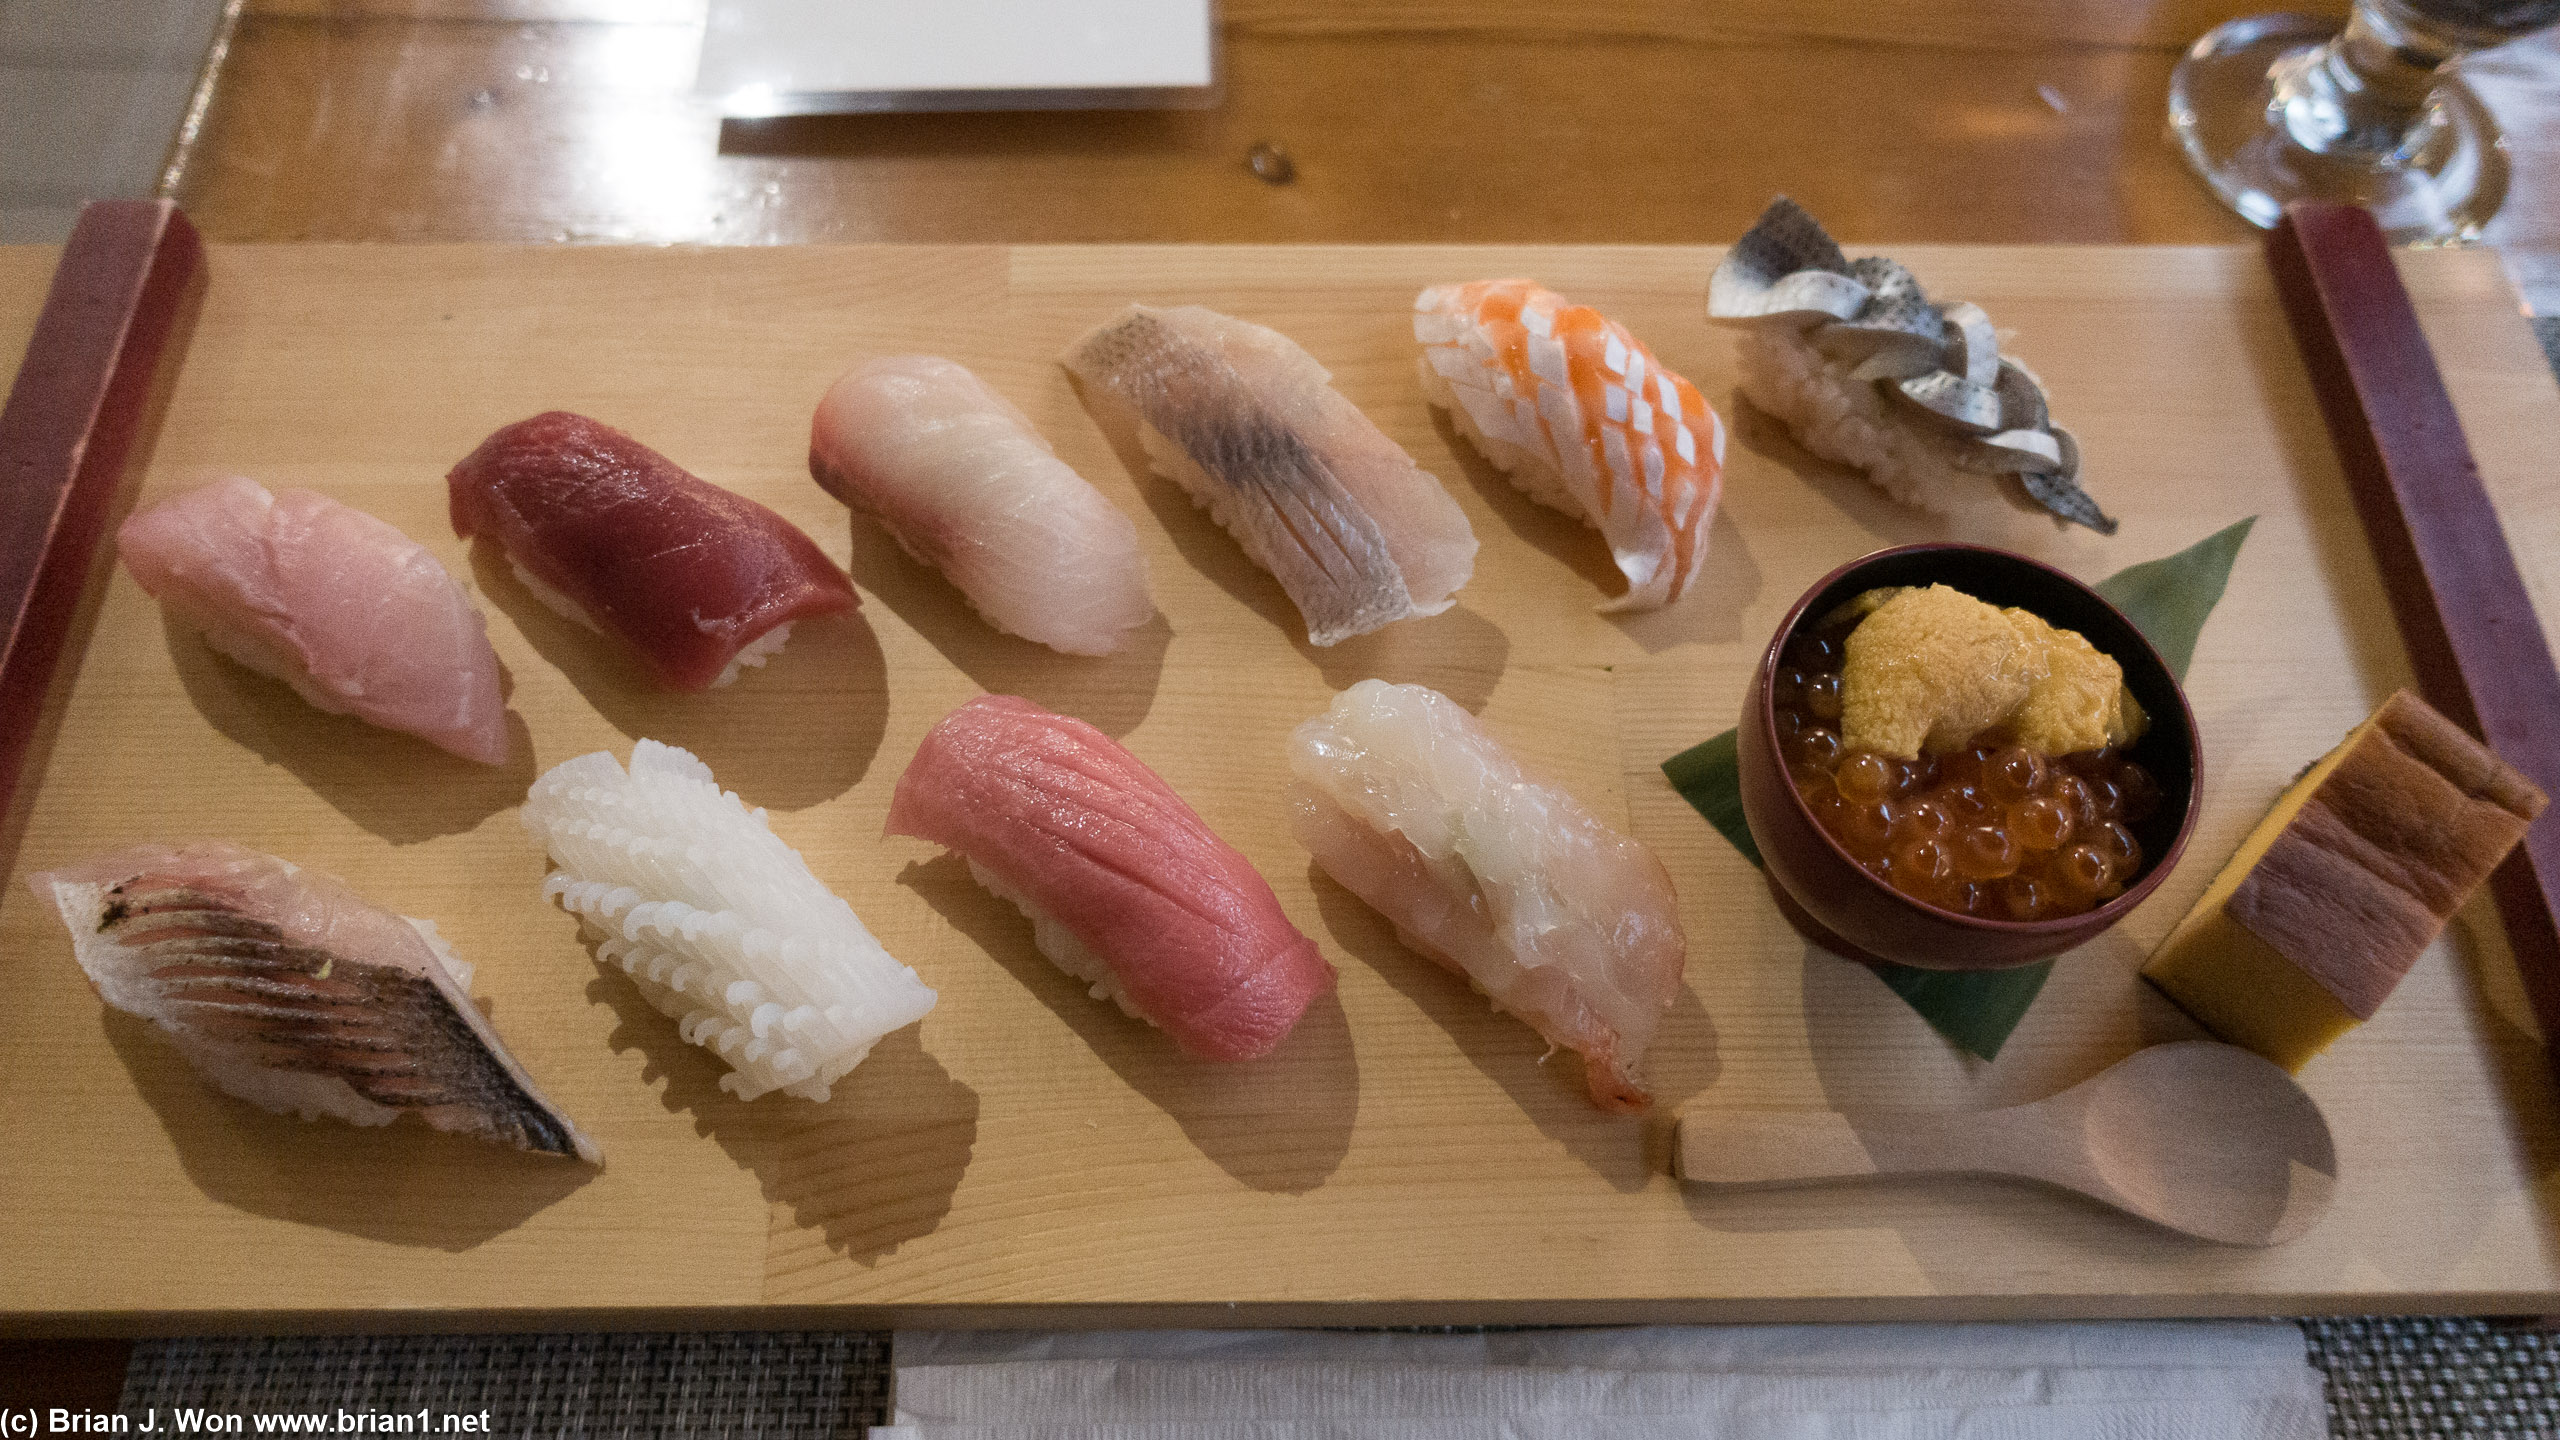 By row from top left: Striped jack, bluefin tuna, golden eye snapper, king mackerel, ocean trout, mackerel, barracuda, squid, chutoro, ama ebi, uni ikura, tamago.